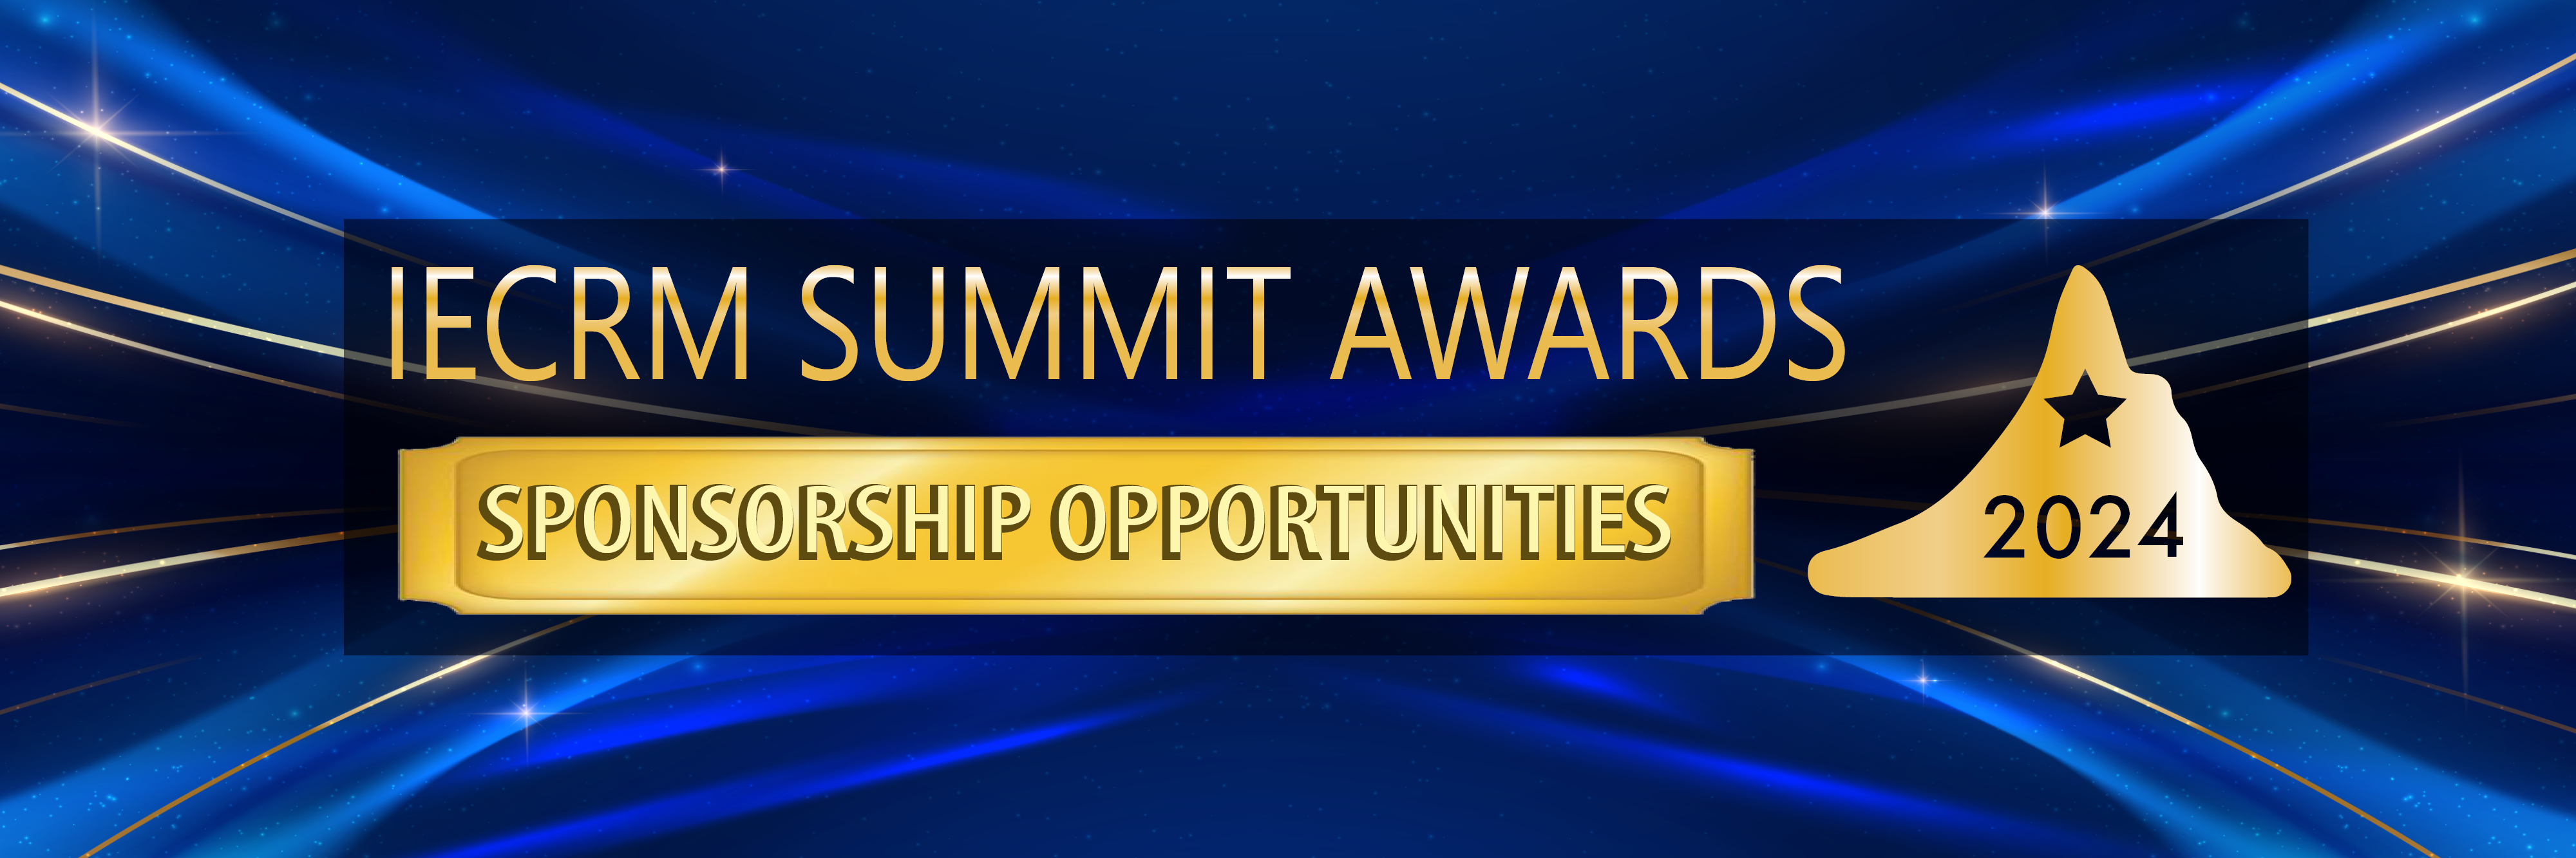 SPONSOR the 2024 IECRM Summit Awards